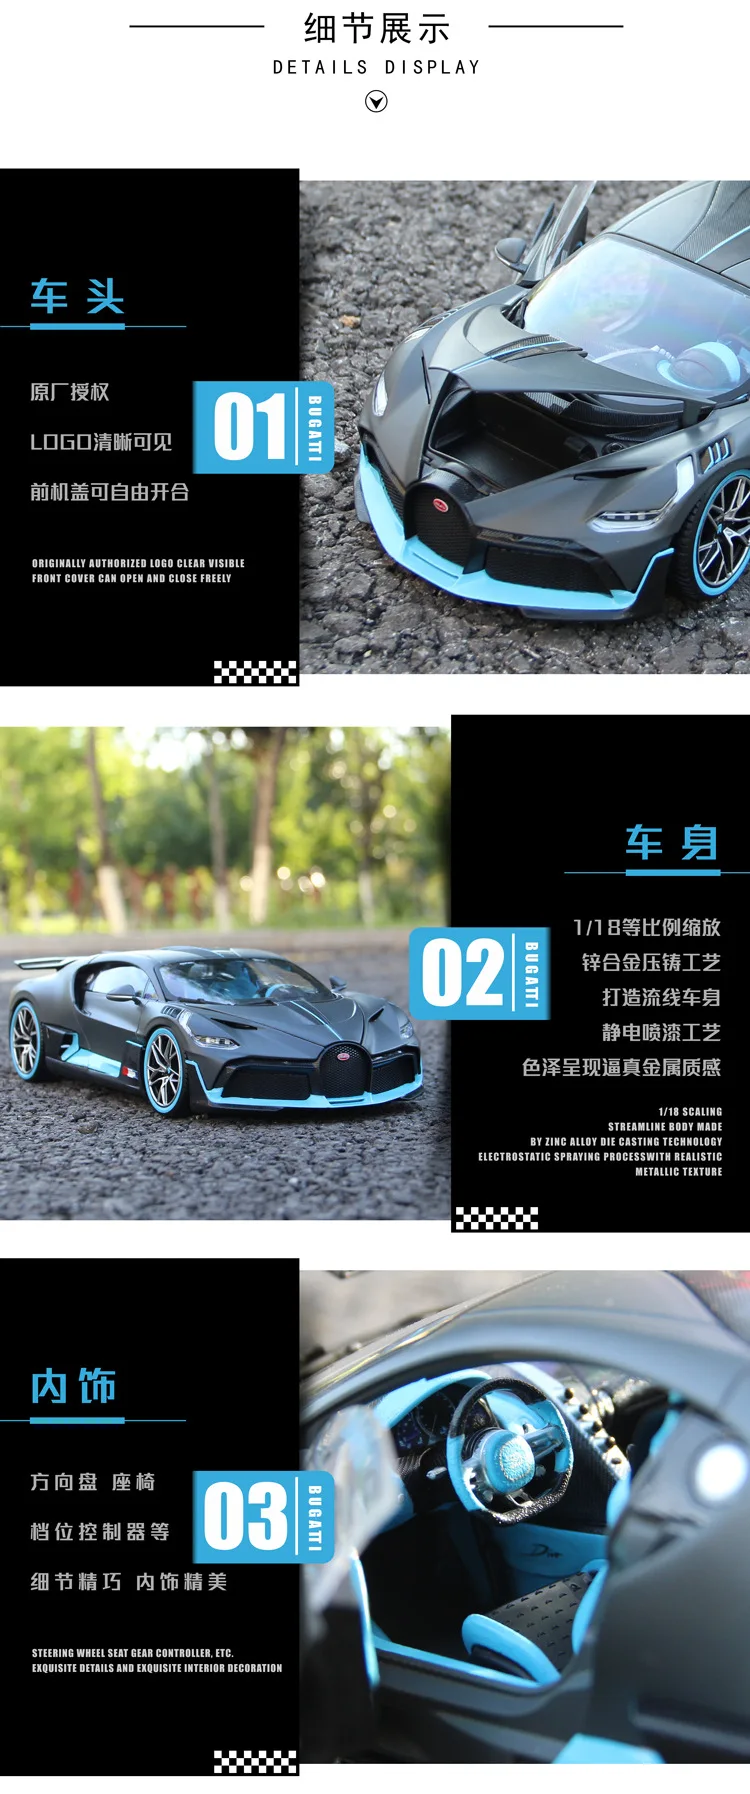 Bimeigao 1: 18 Bugatti Divo Sports Car Model Alloy Car Model Decoration Crafts